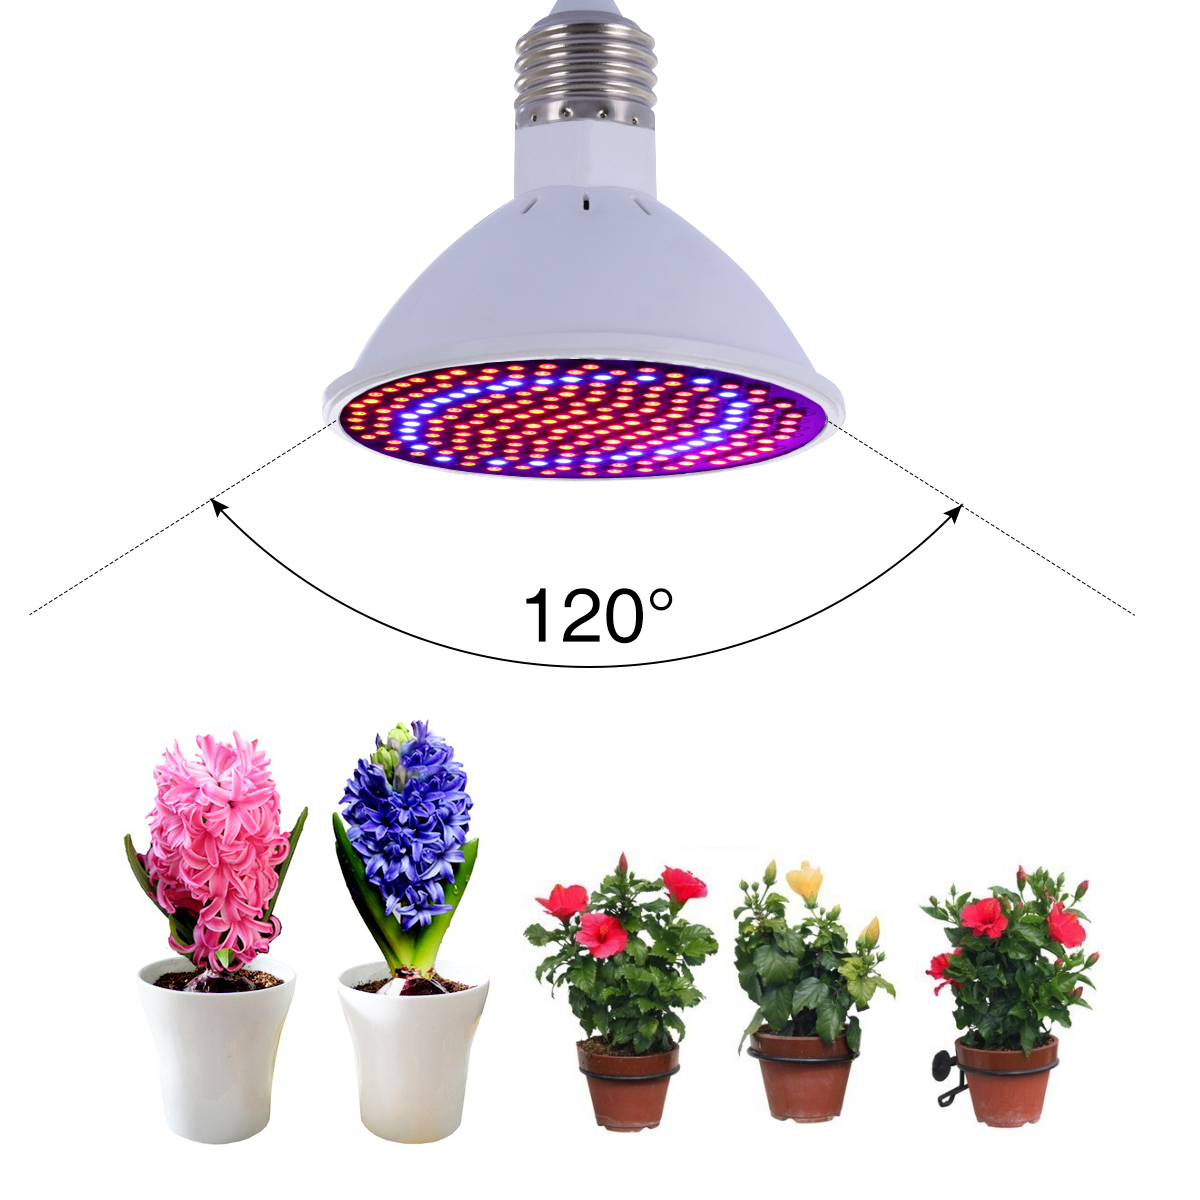 LED-Grow-Light-Bulb-20W-Plant-Light-with-200-LEDs-E27-Base-Grow-Light-Bulbs-for-Indoor-Plants-Vegeta-1958643-2